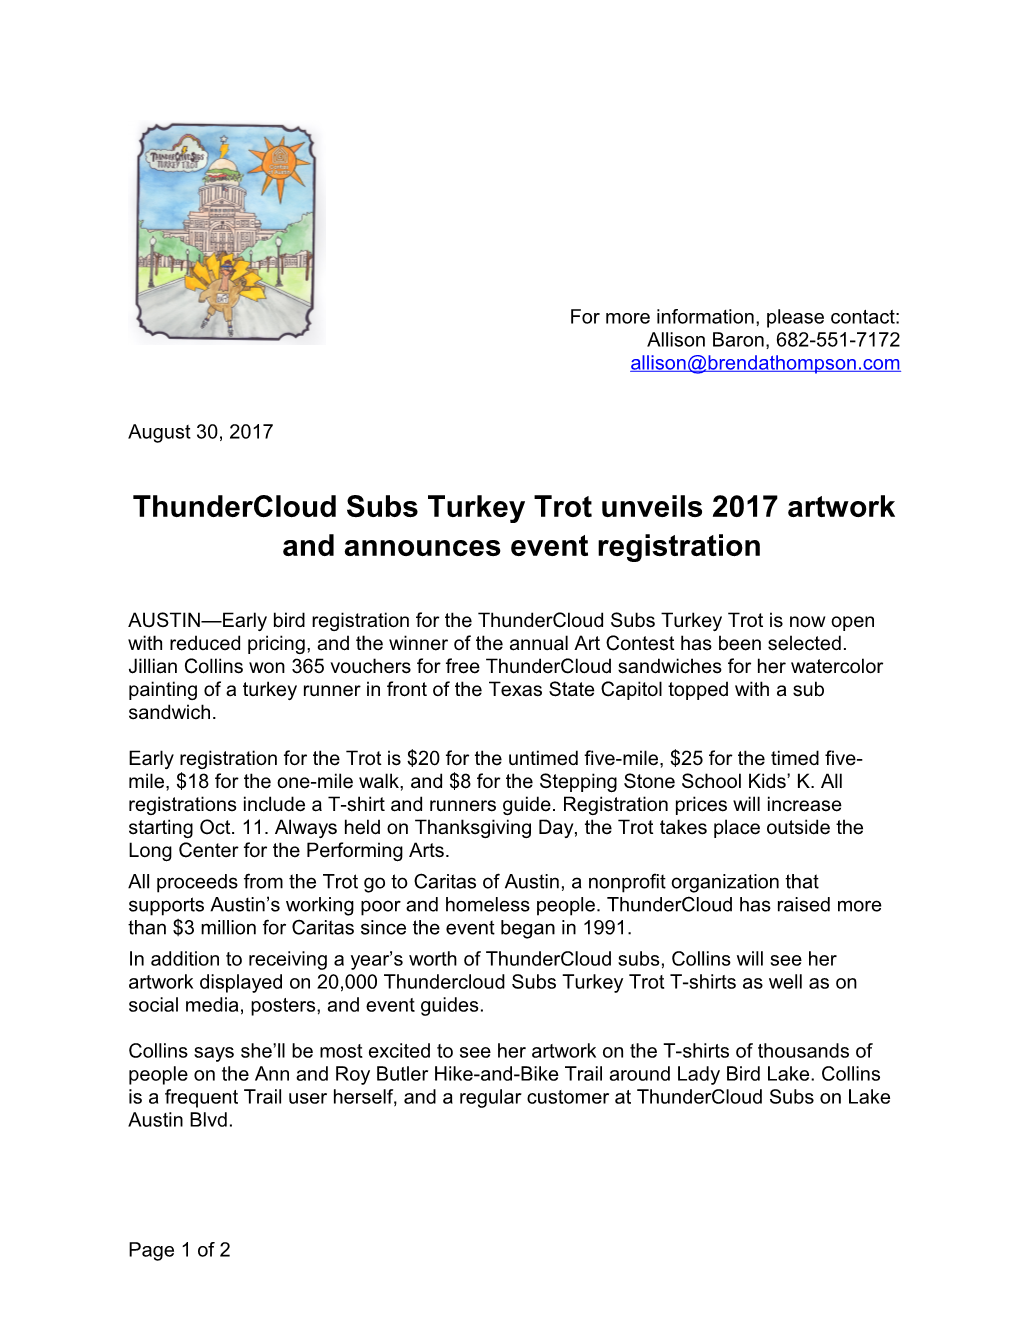 Thundercloud Subs Turkey Trot Unveils 2017 Artwork